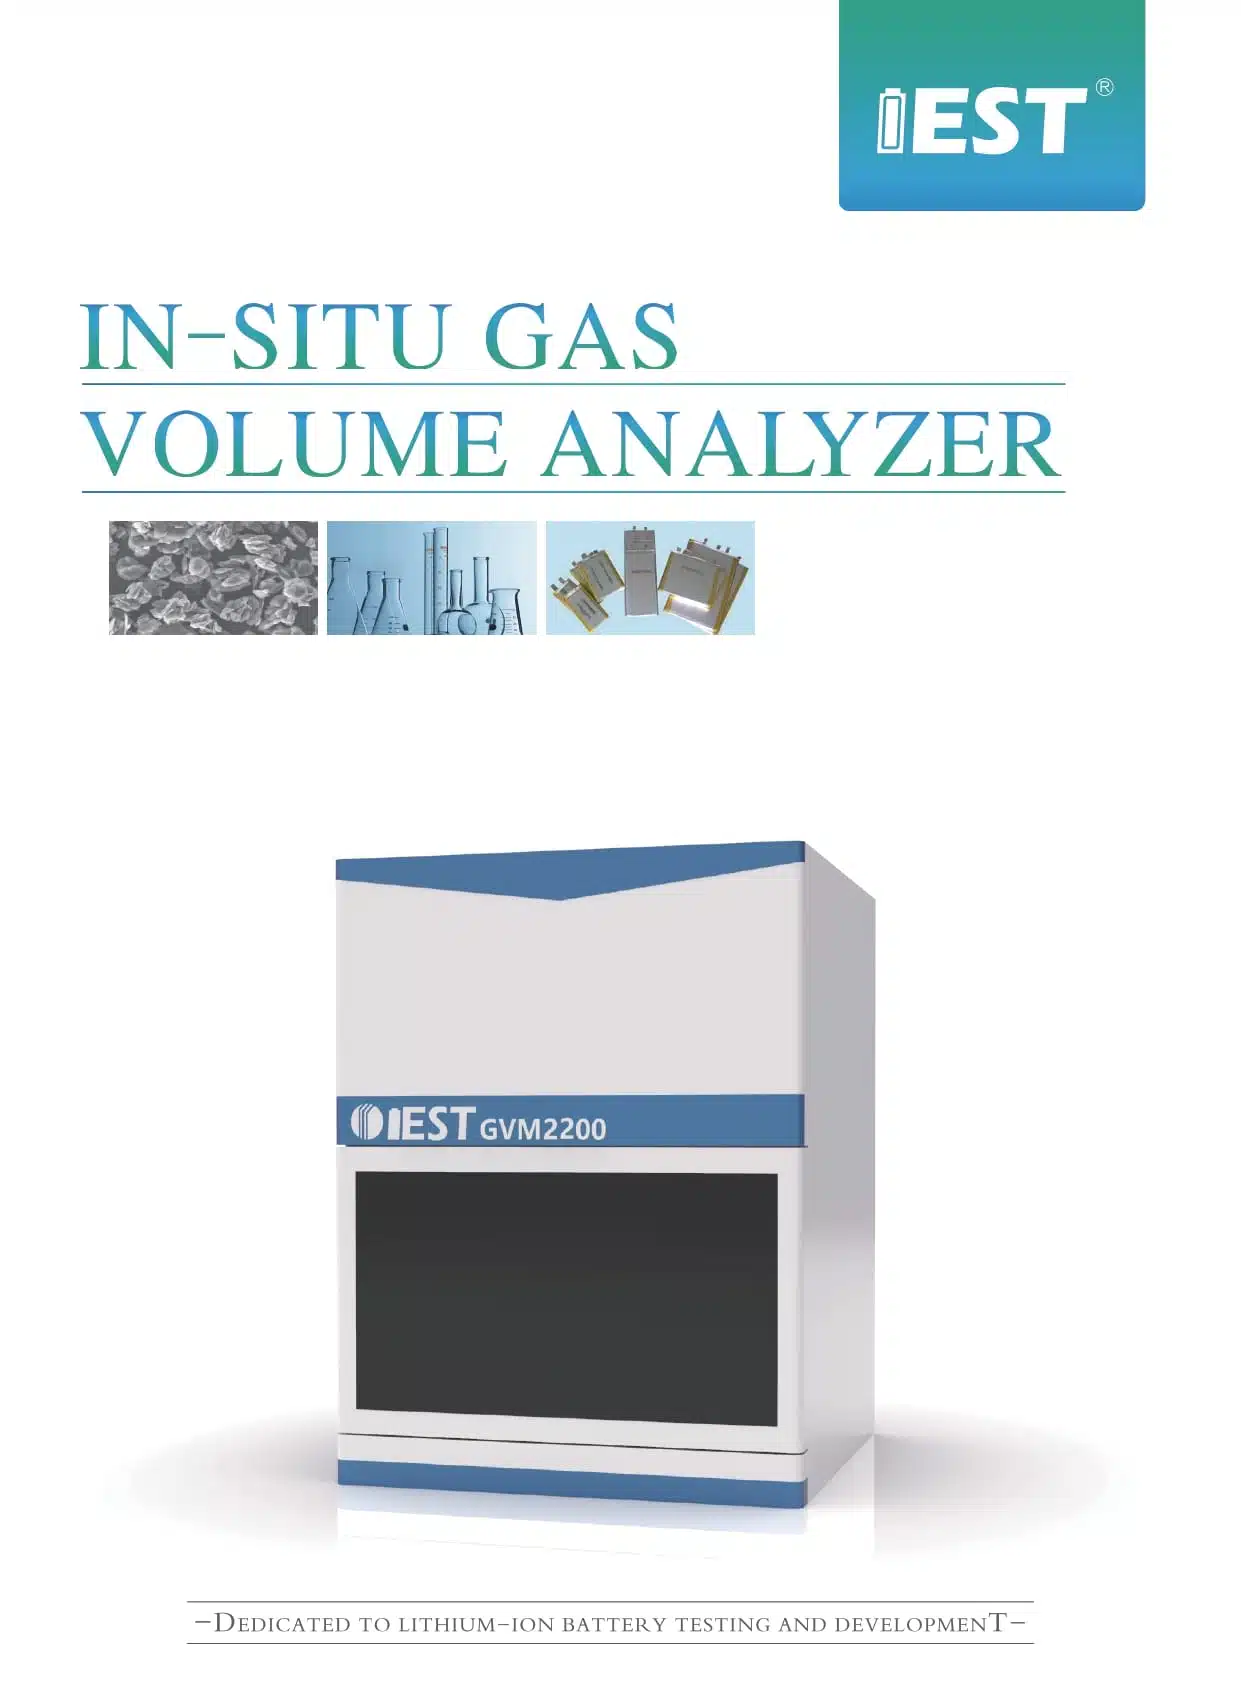 IEST In-Situ Battery Gassing Volume Analyzer (GVM2200)